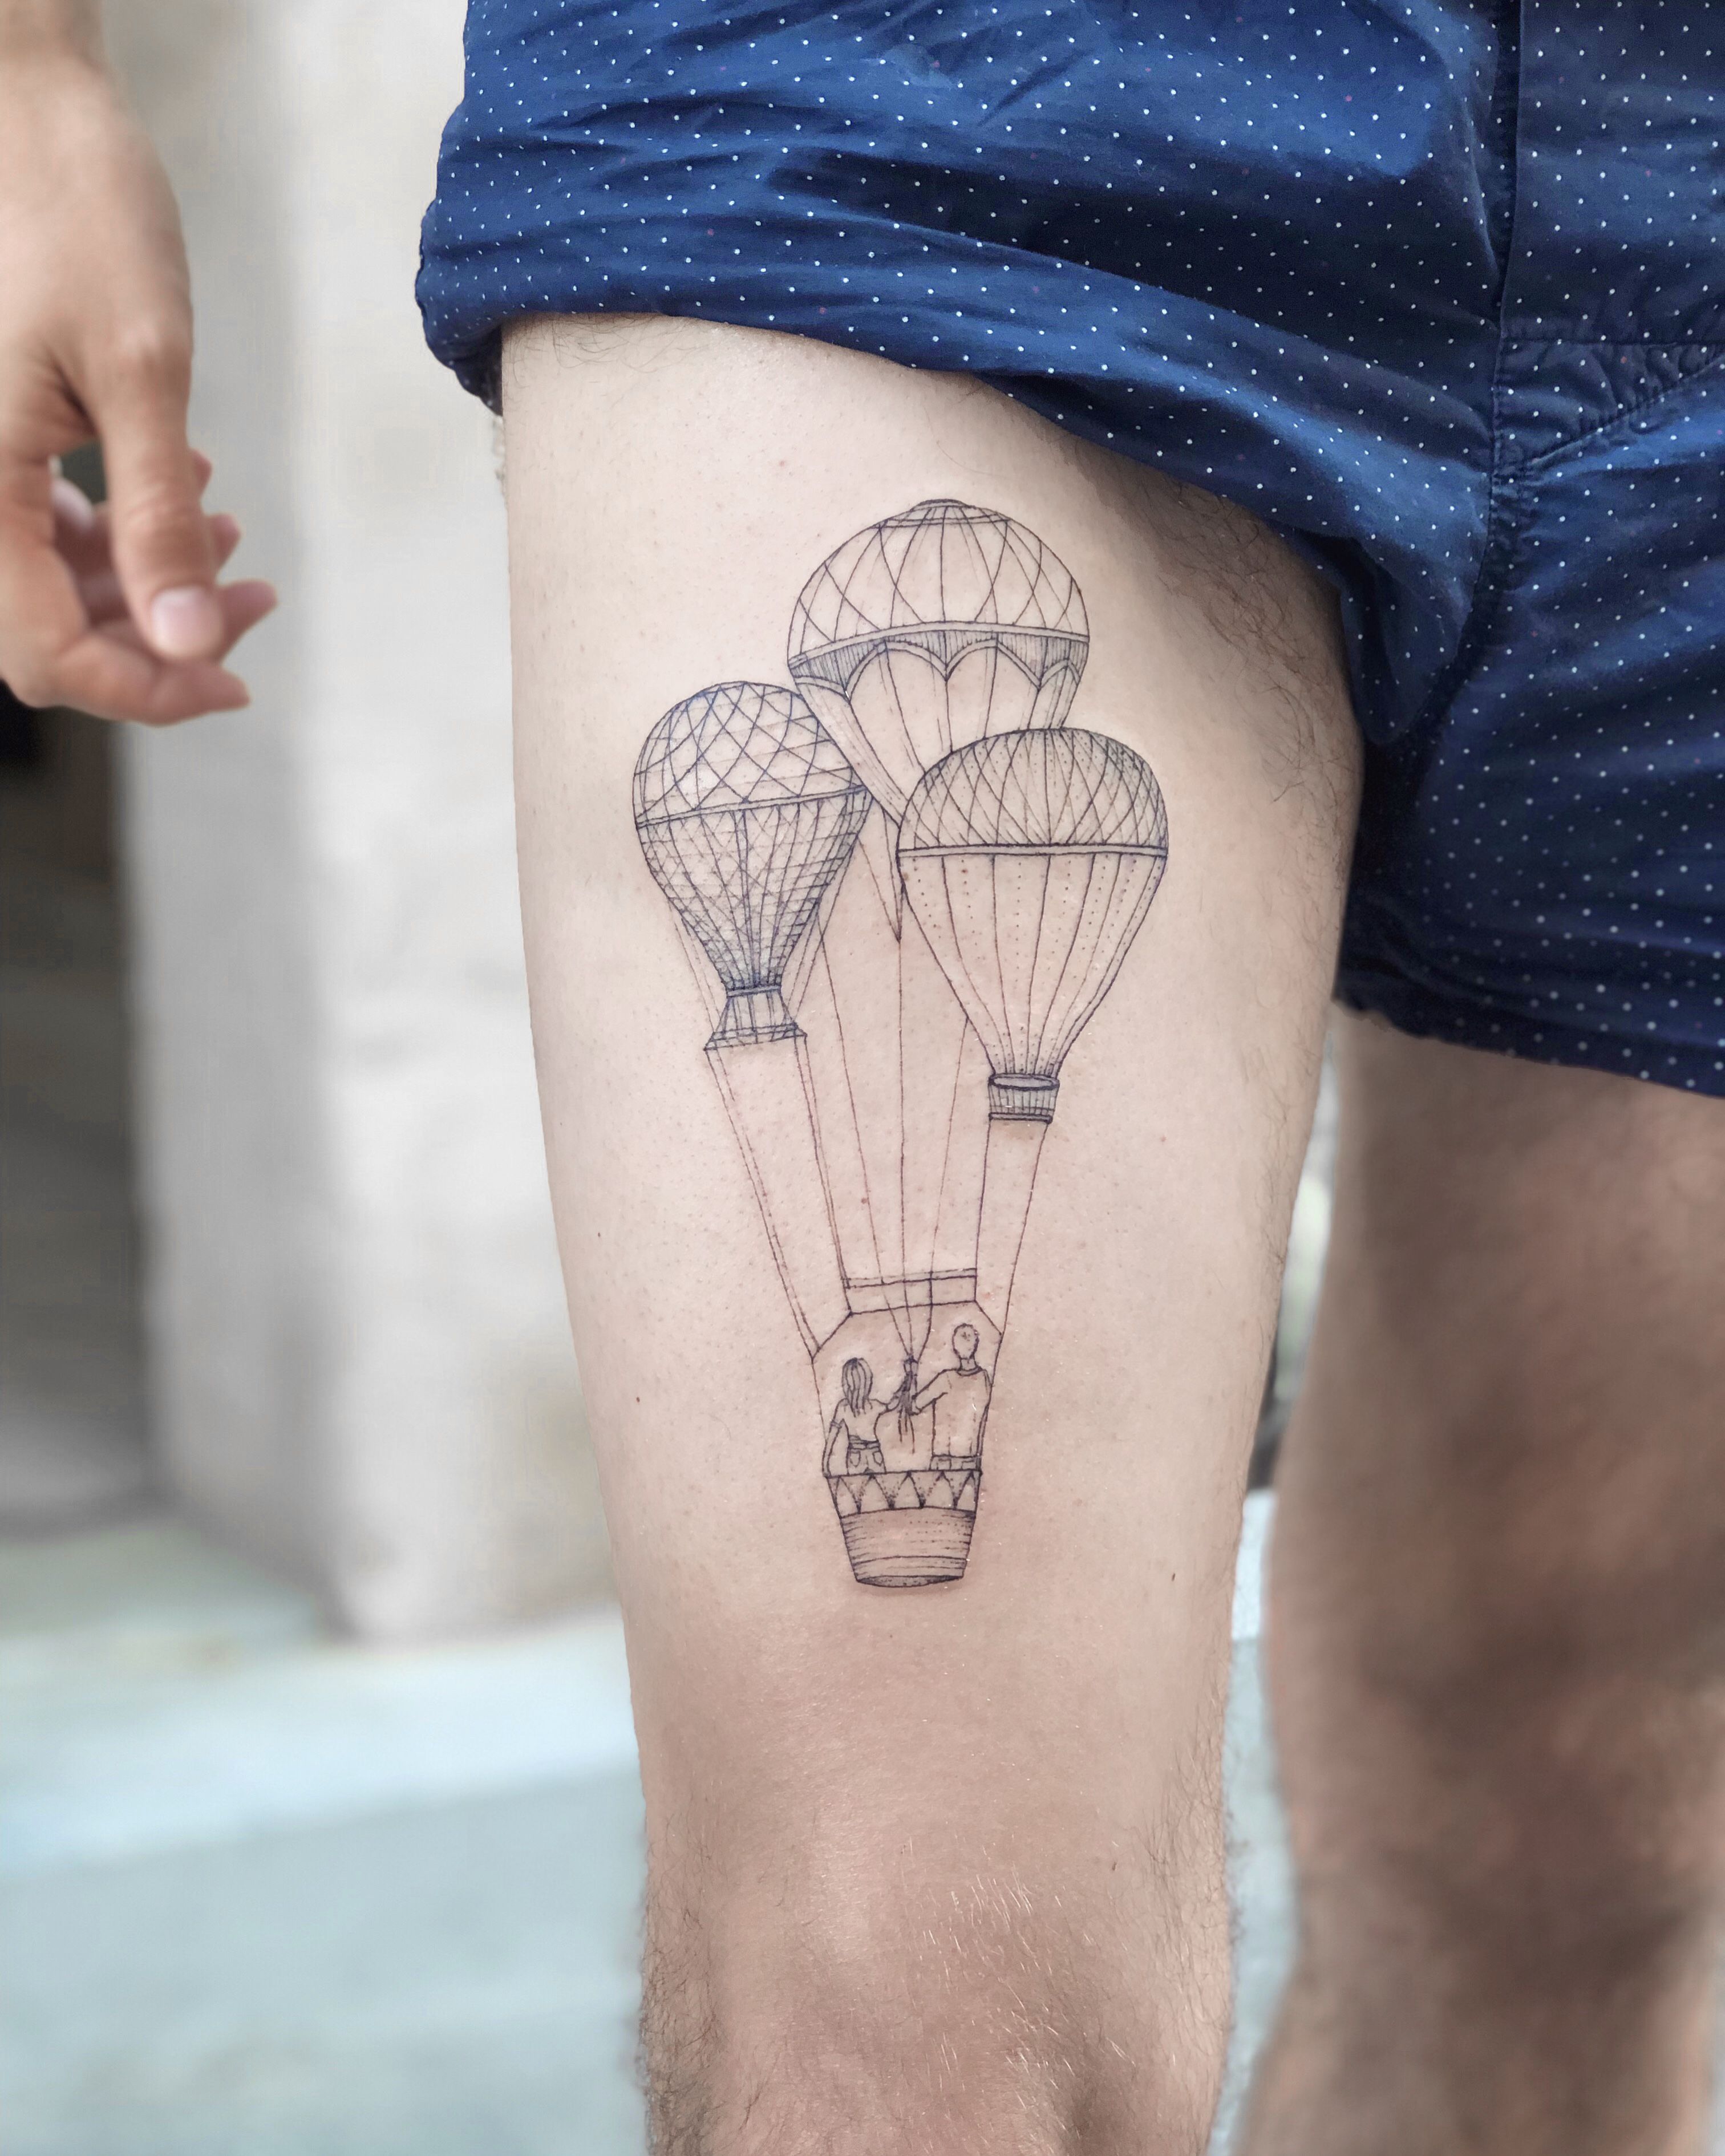 Hot air balloon tattoo on the inner arm